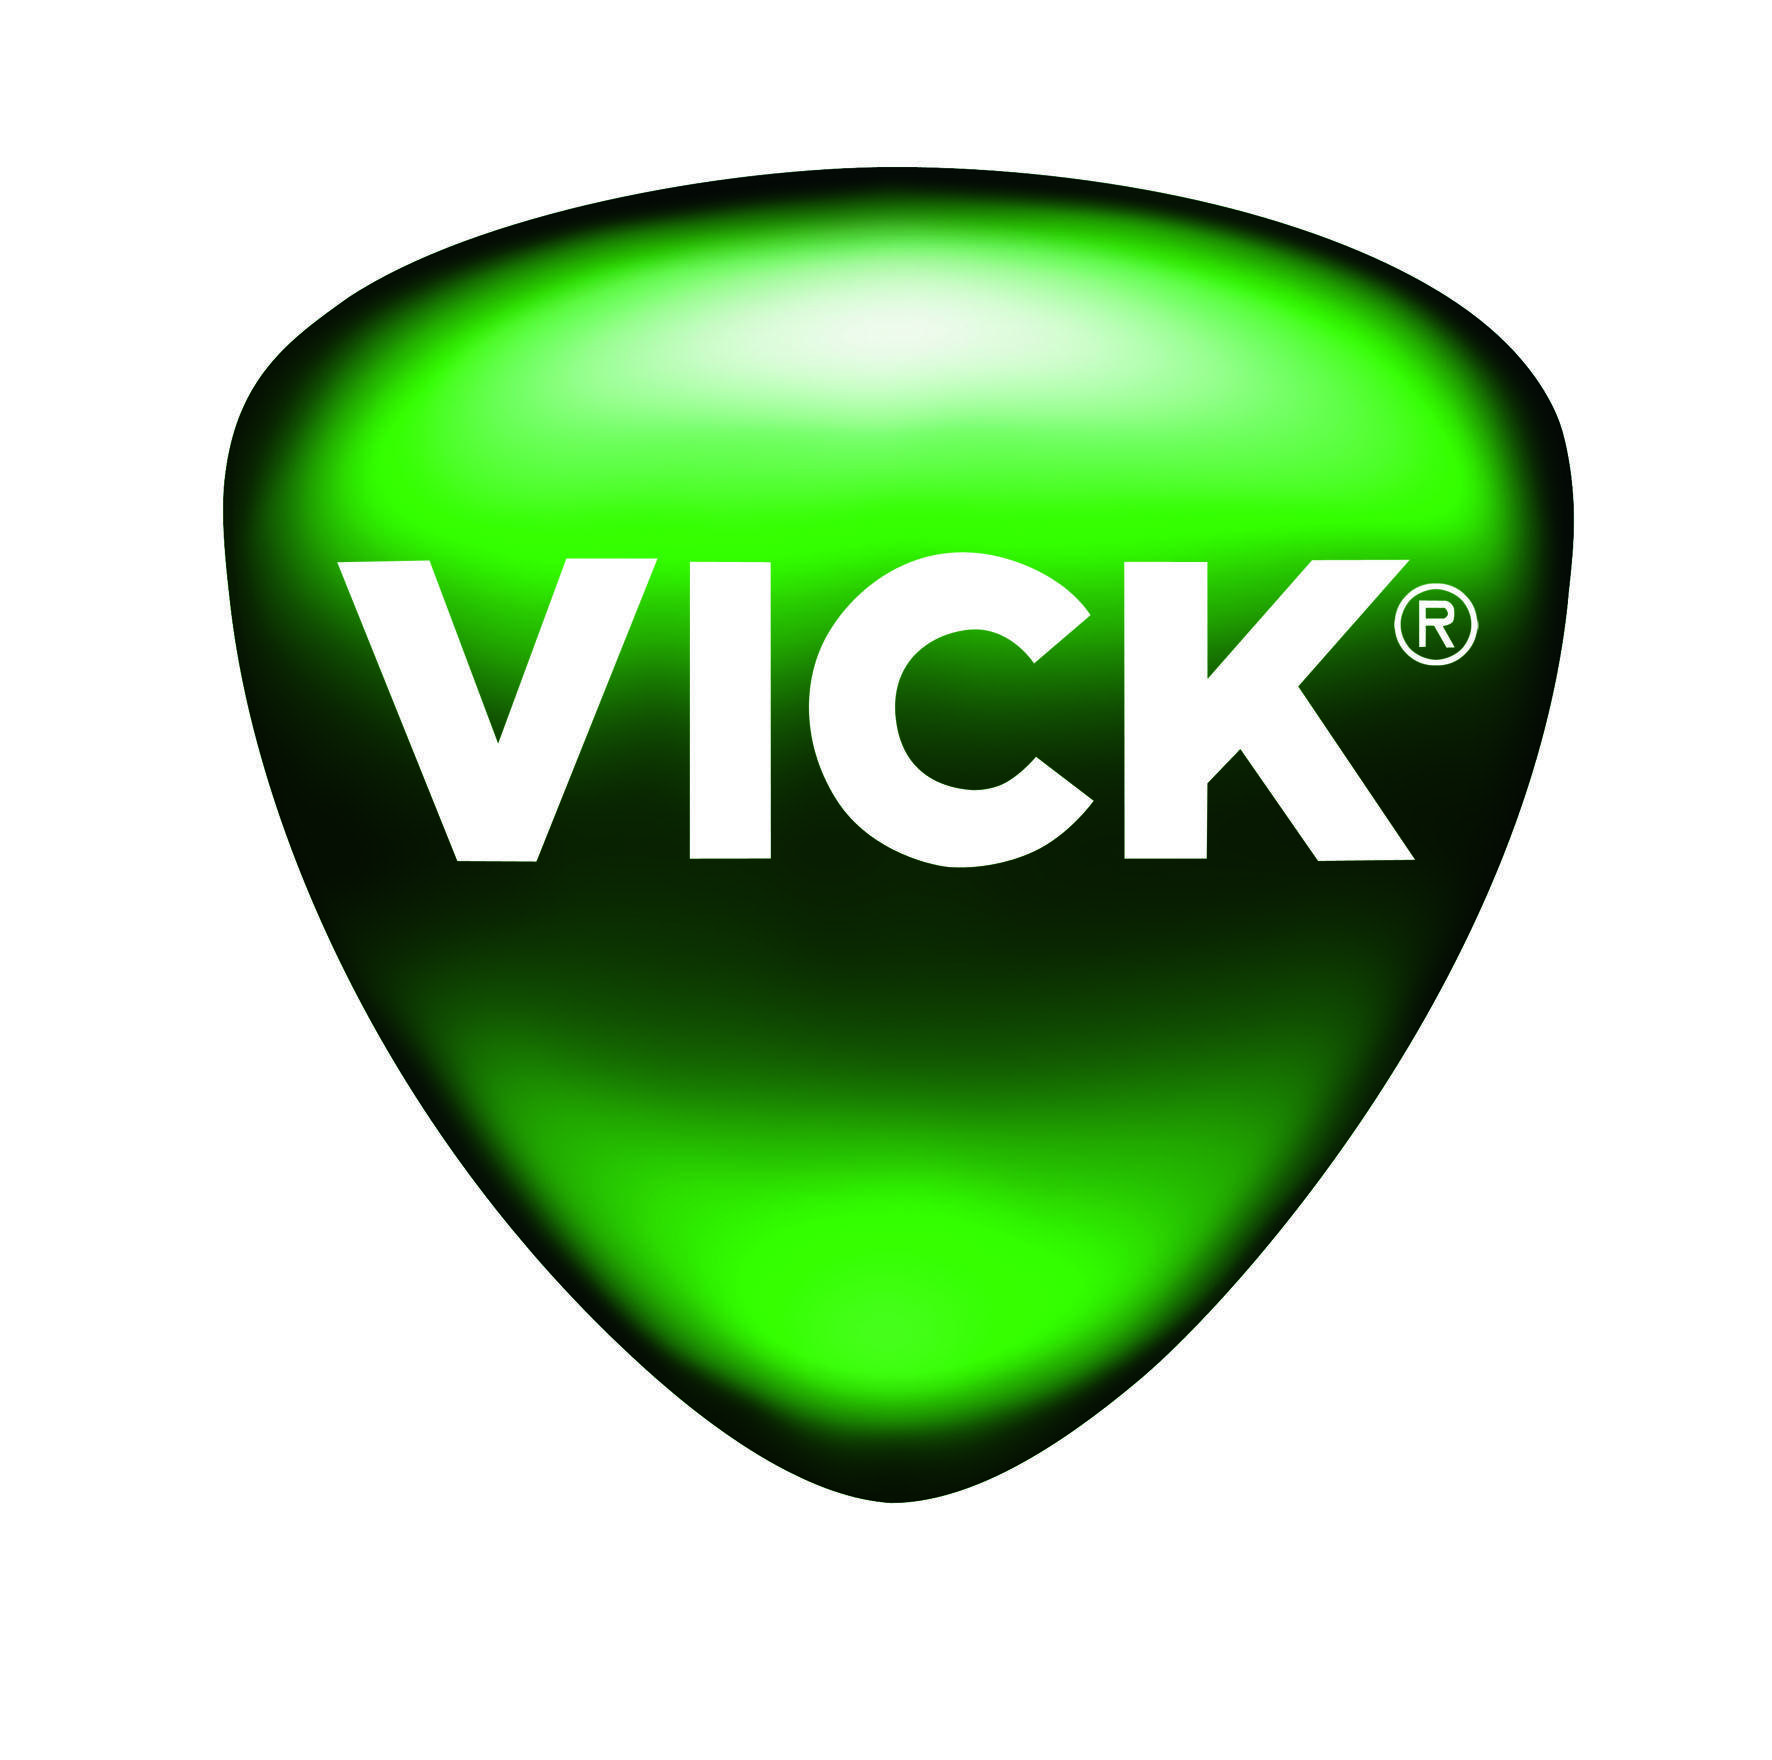 Vicks Logo - Vicks Logos